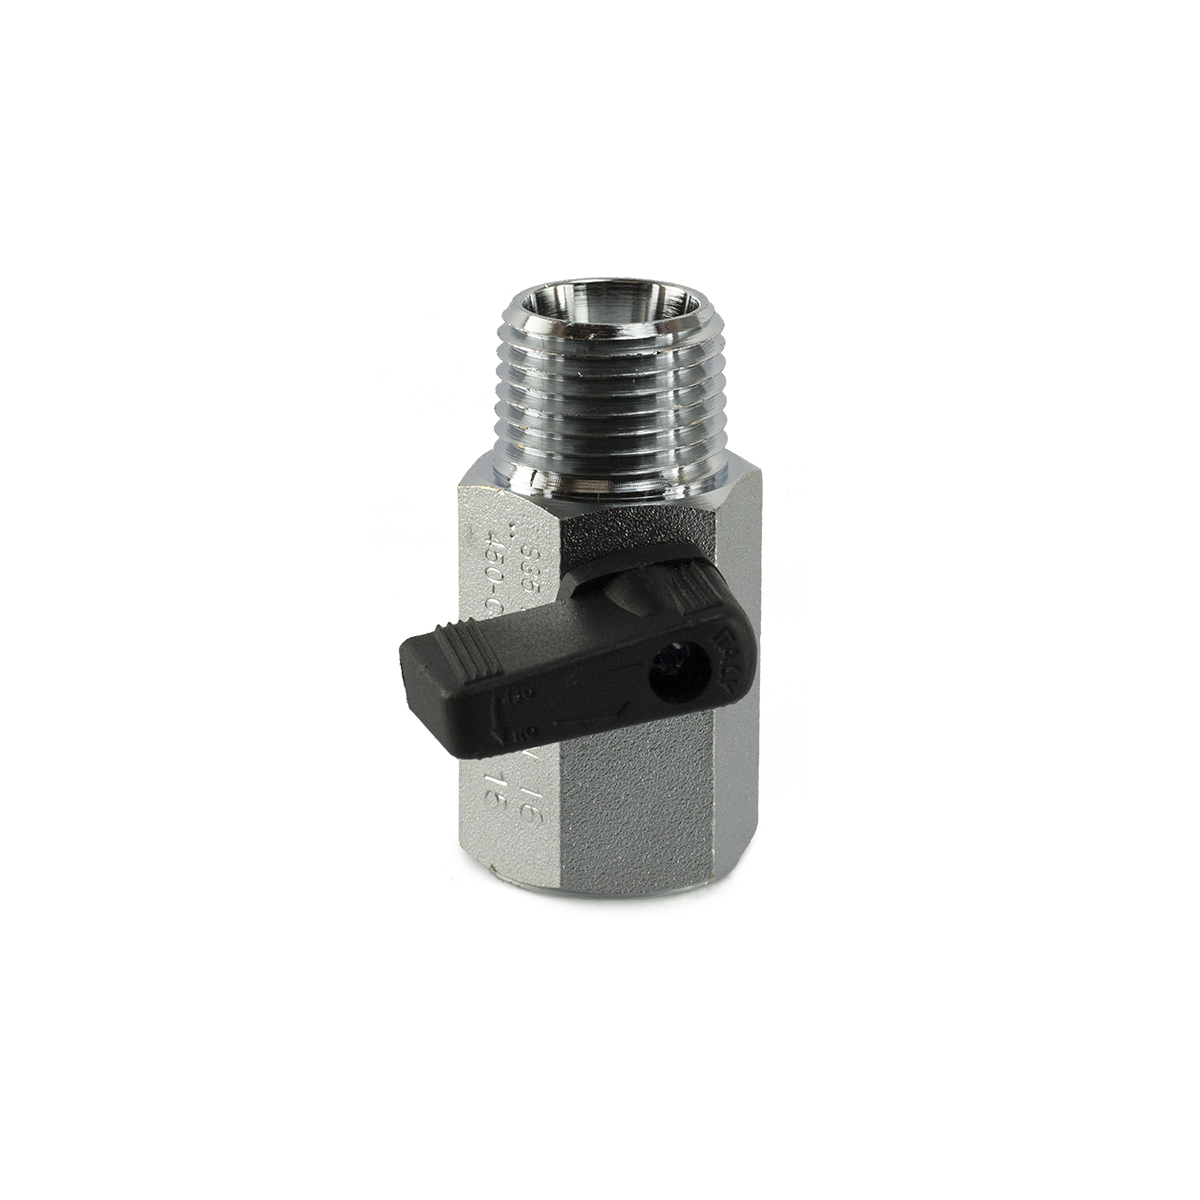 Drain valve stock image